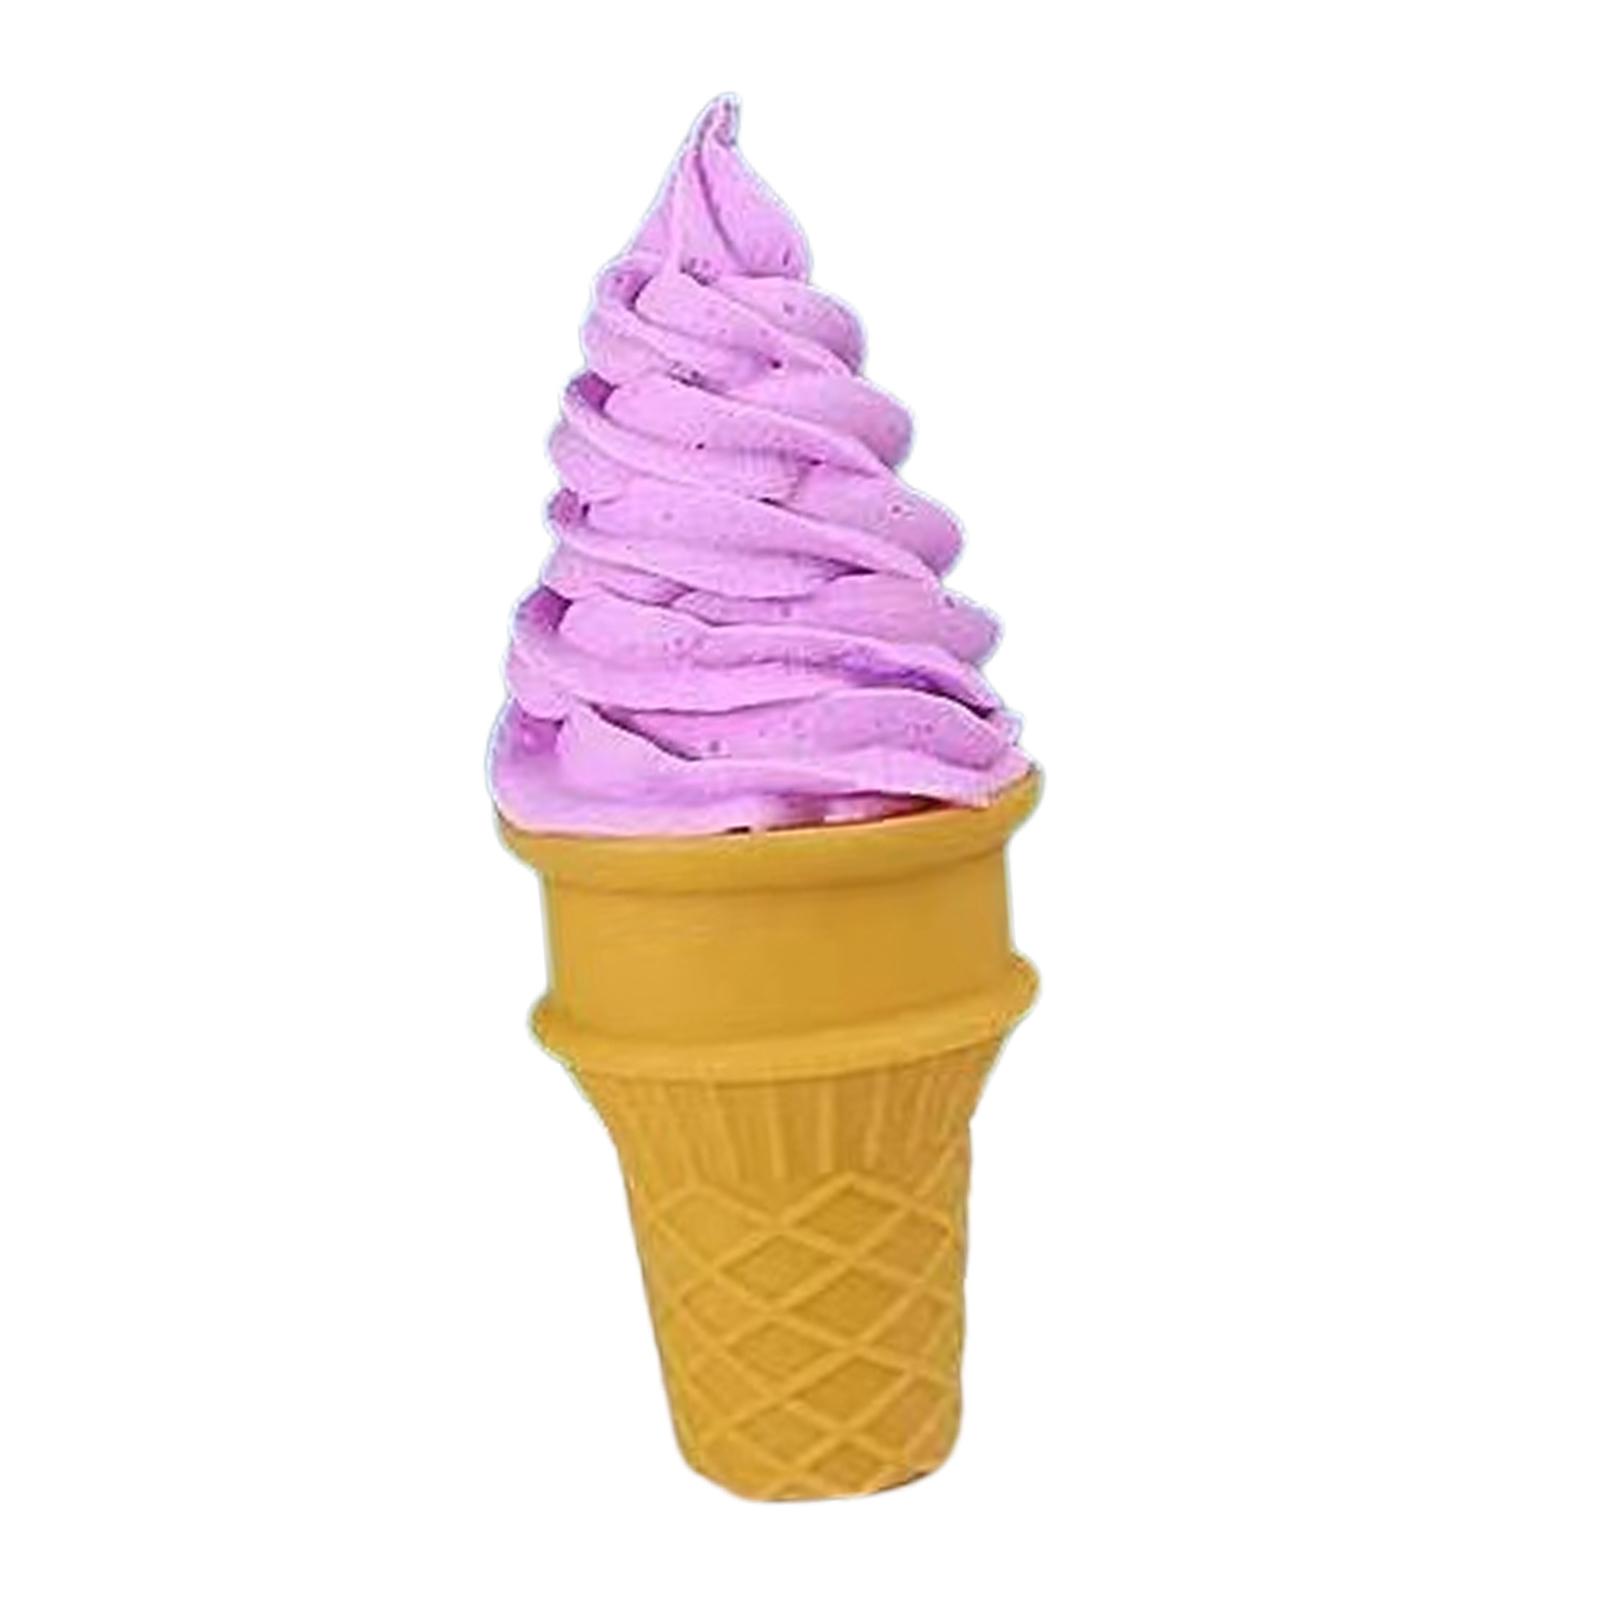 Fake Ice Cream Cone Food Model for Display Dessert Photo Props Desktop Decor Violet